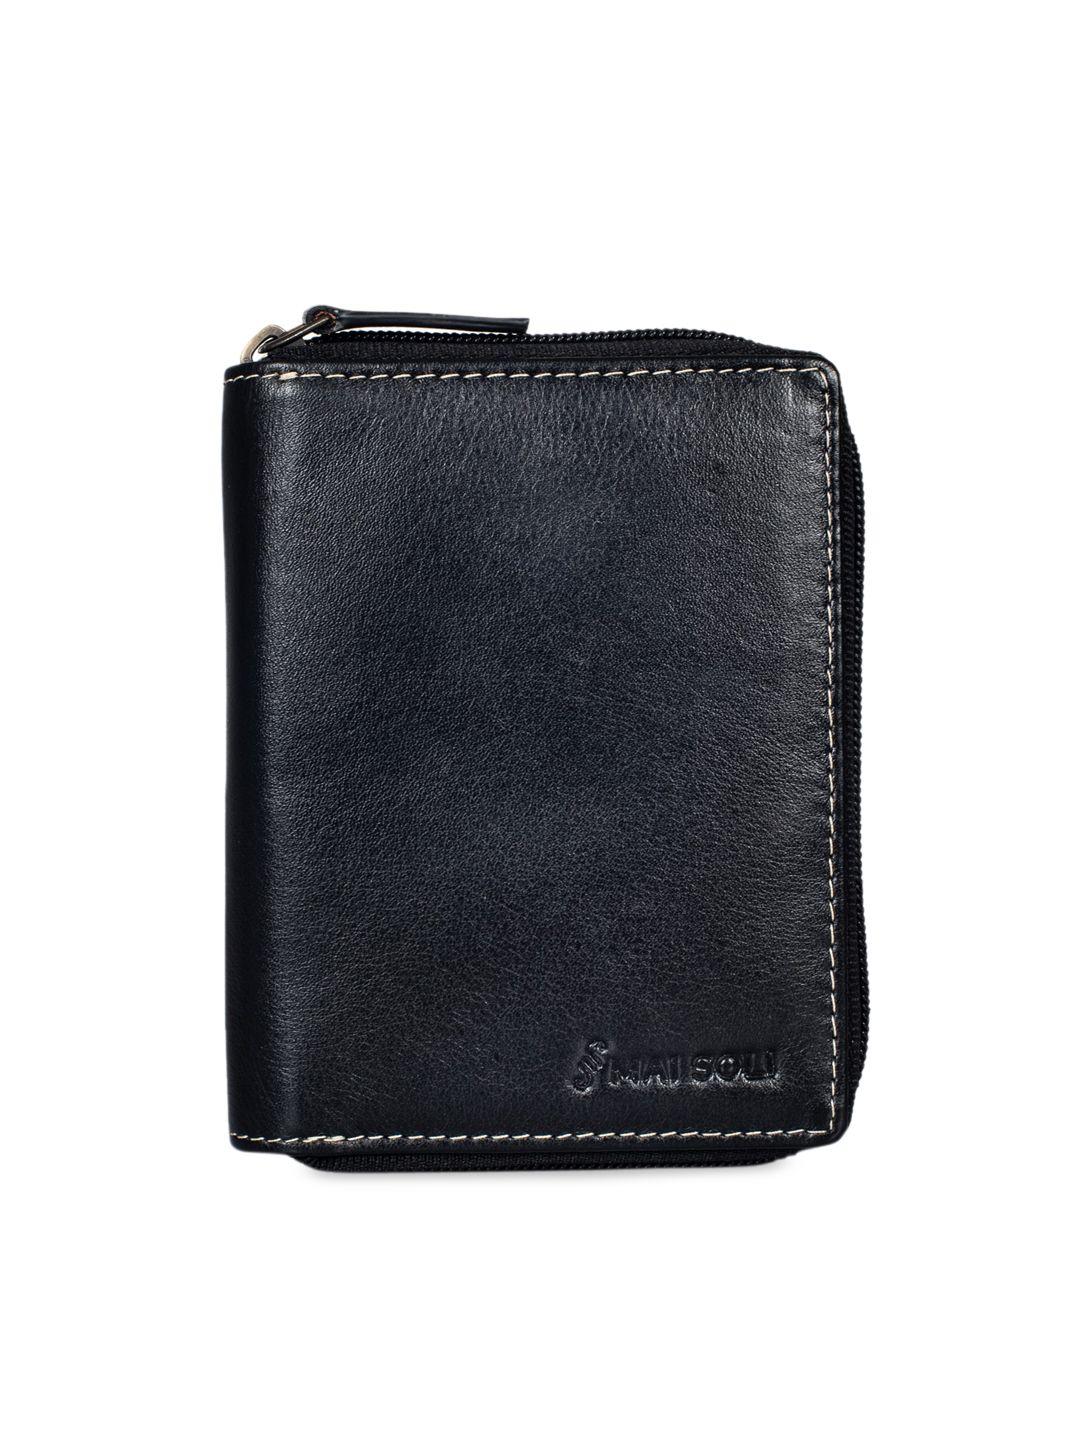 mai soli women black solid leather zip around wallet